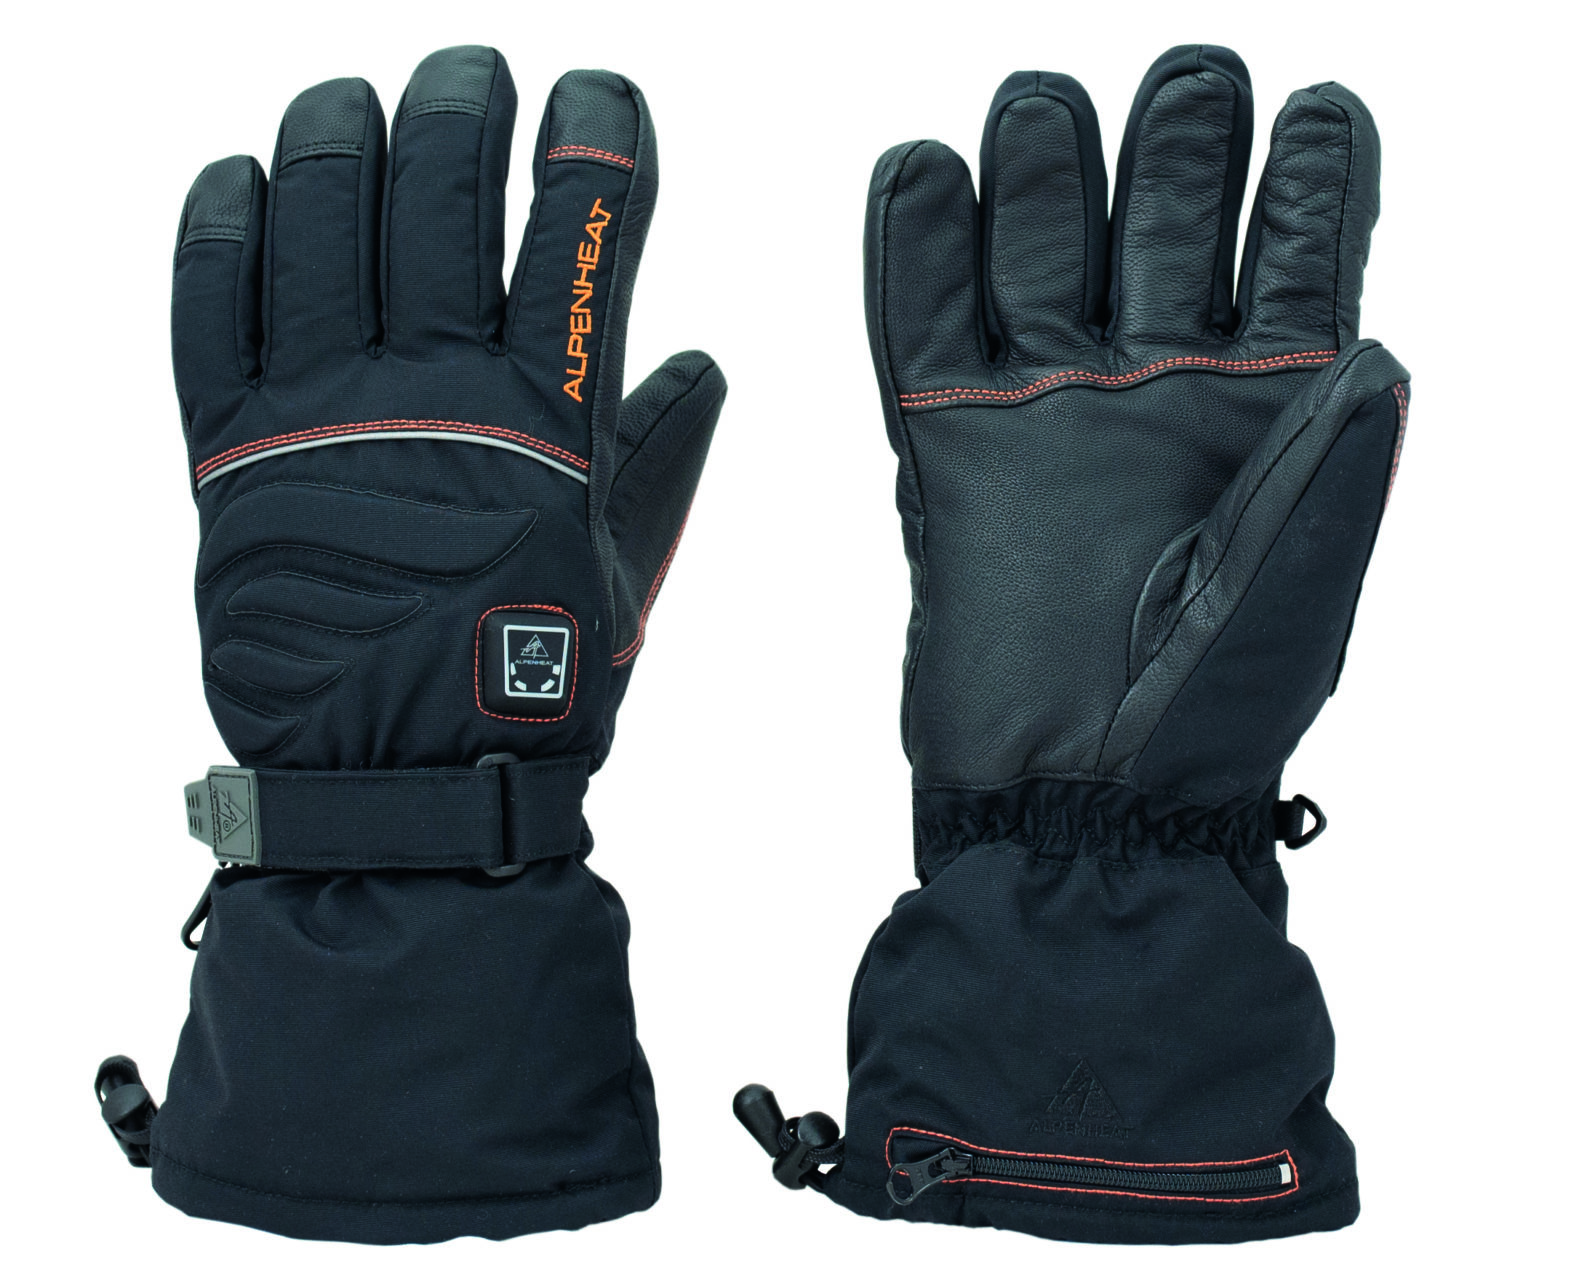 Alpenheat Fire Glove AG2 beheizbare Handschuhe Heizung Ski Motorrad heizbar 